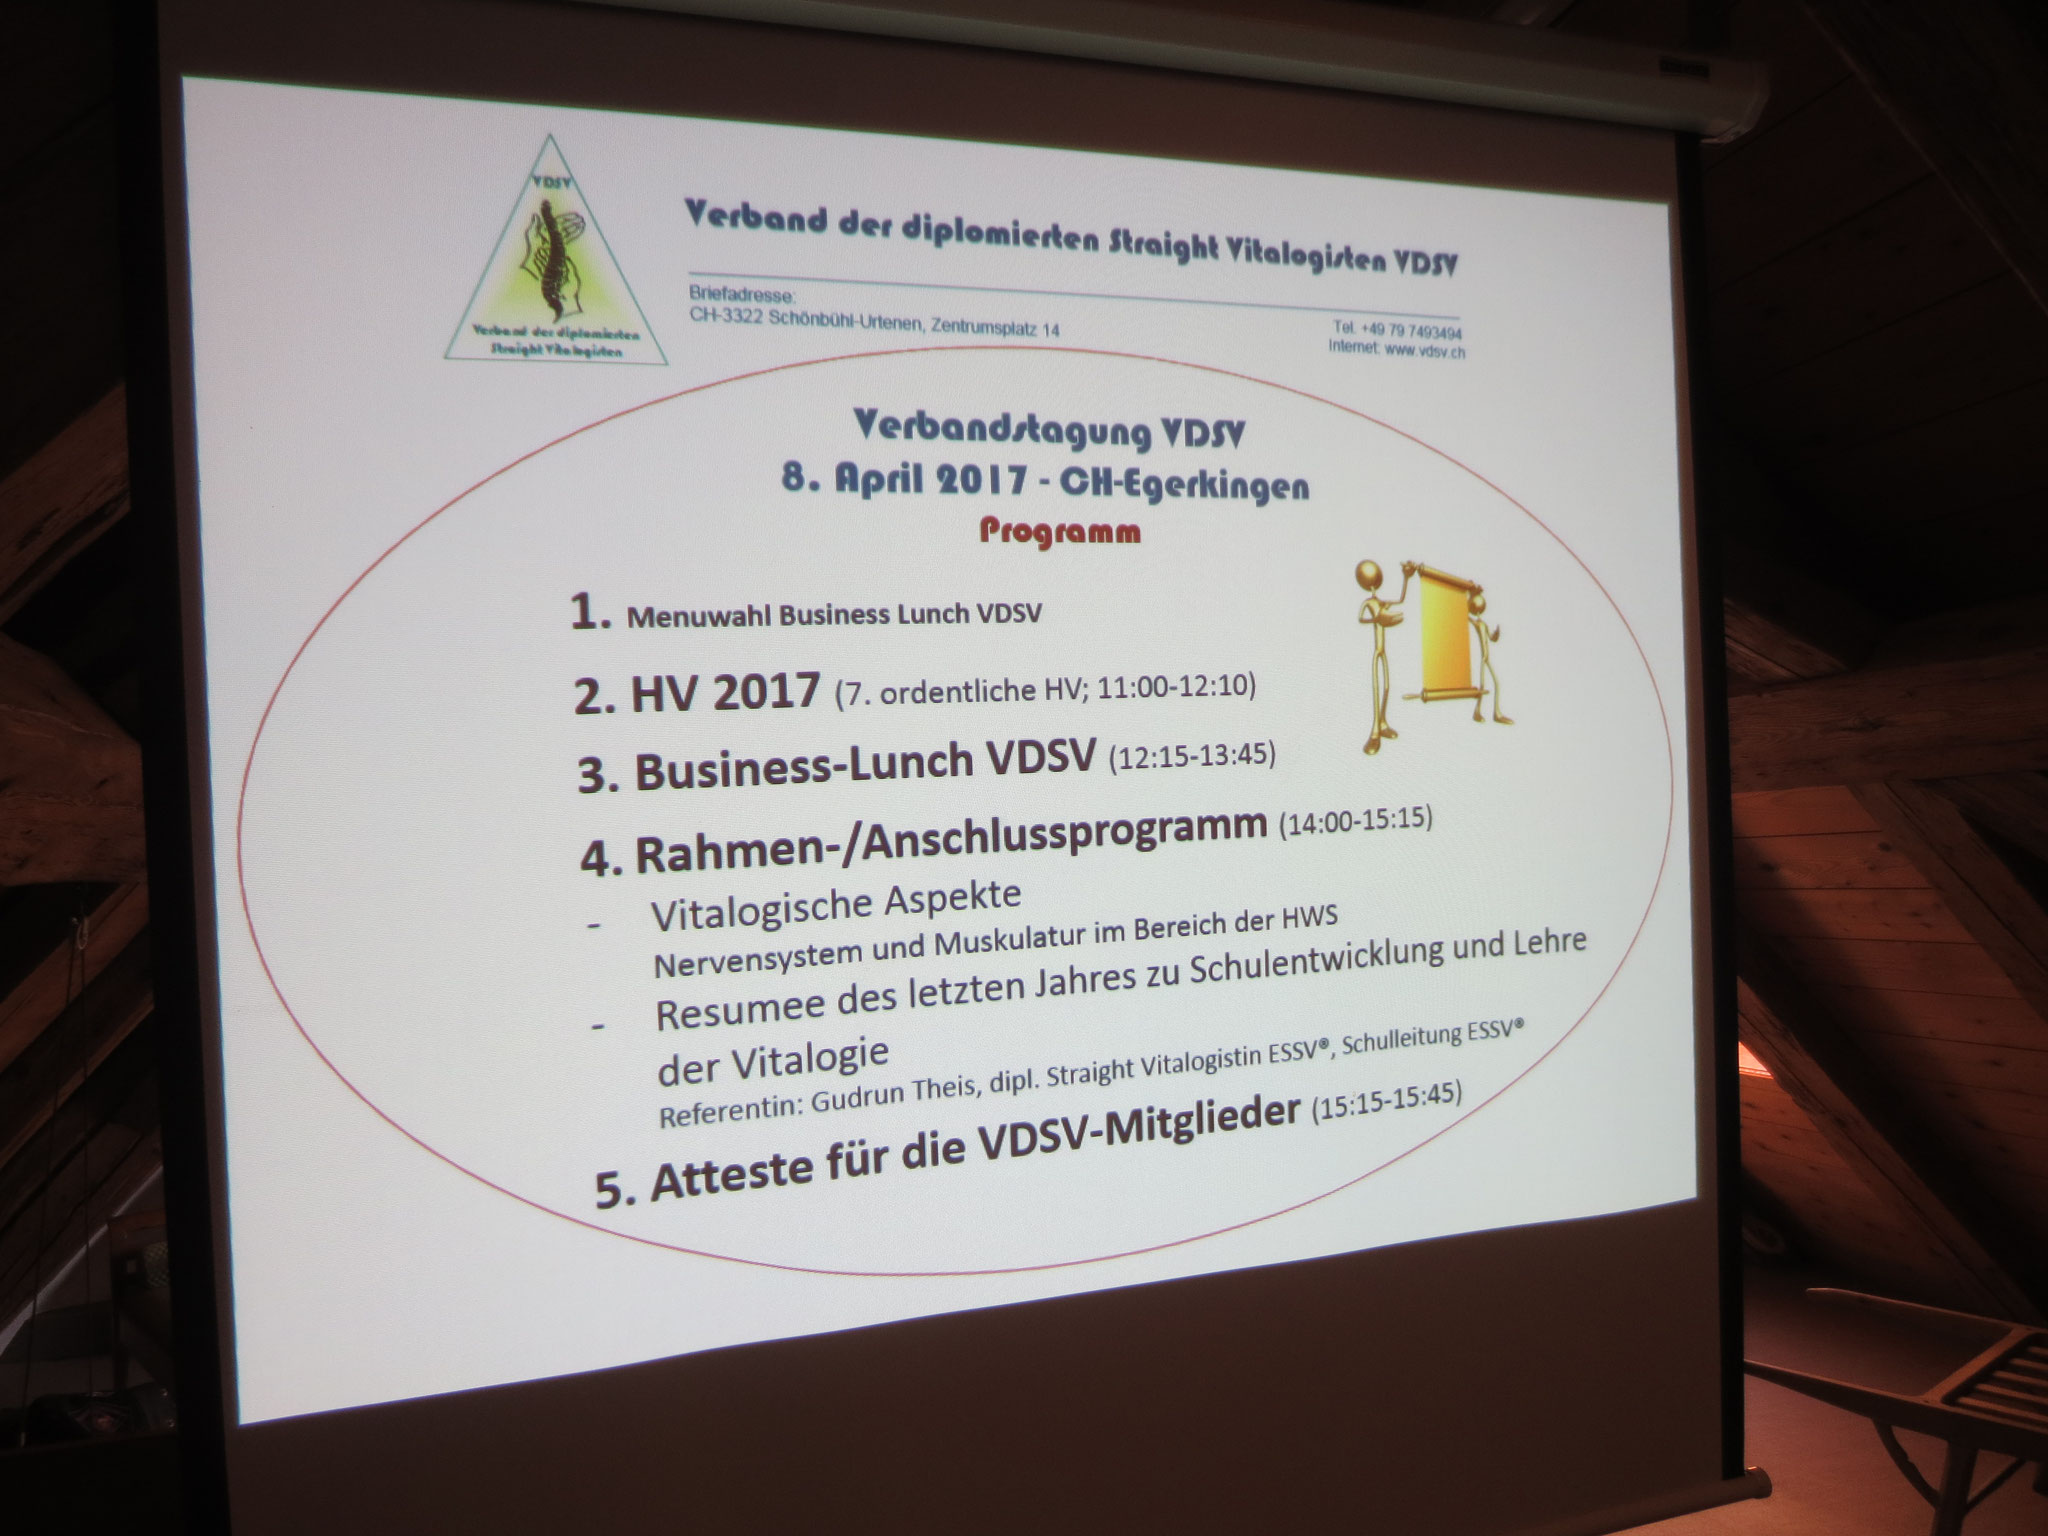 Programm der VDSV-Tagung 08.04.2017 in CH-Egerkingen